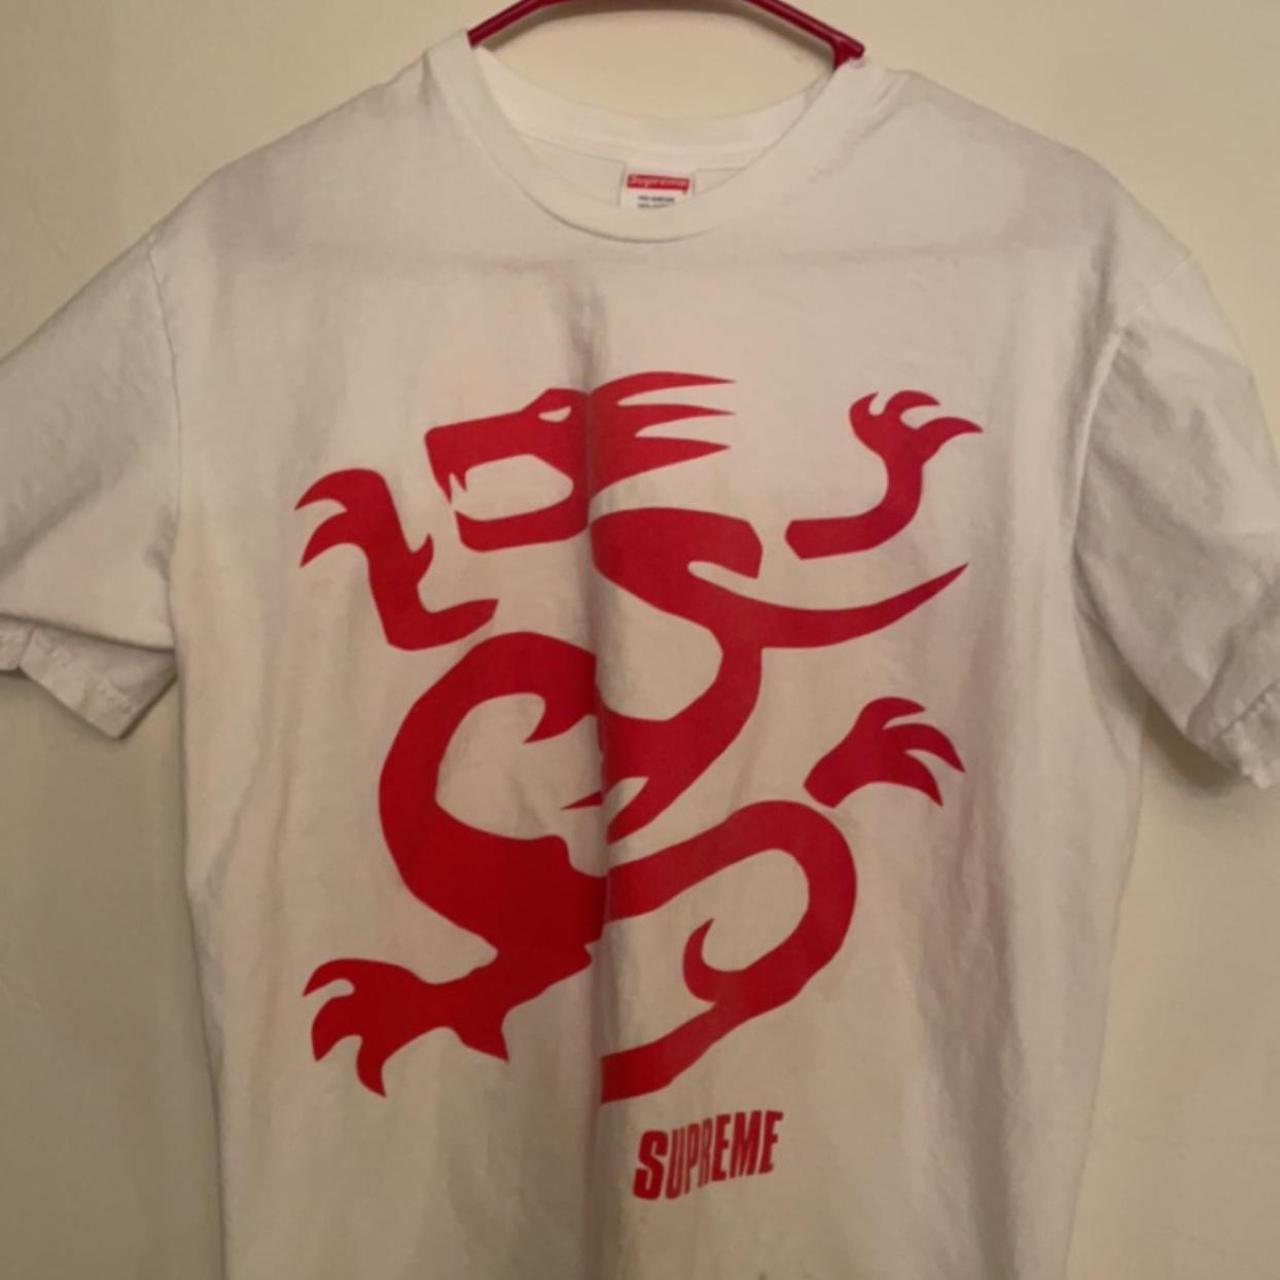 Supreme Mobb Deep Dragon white T-shirt in Red